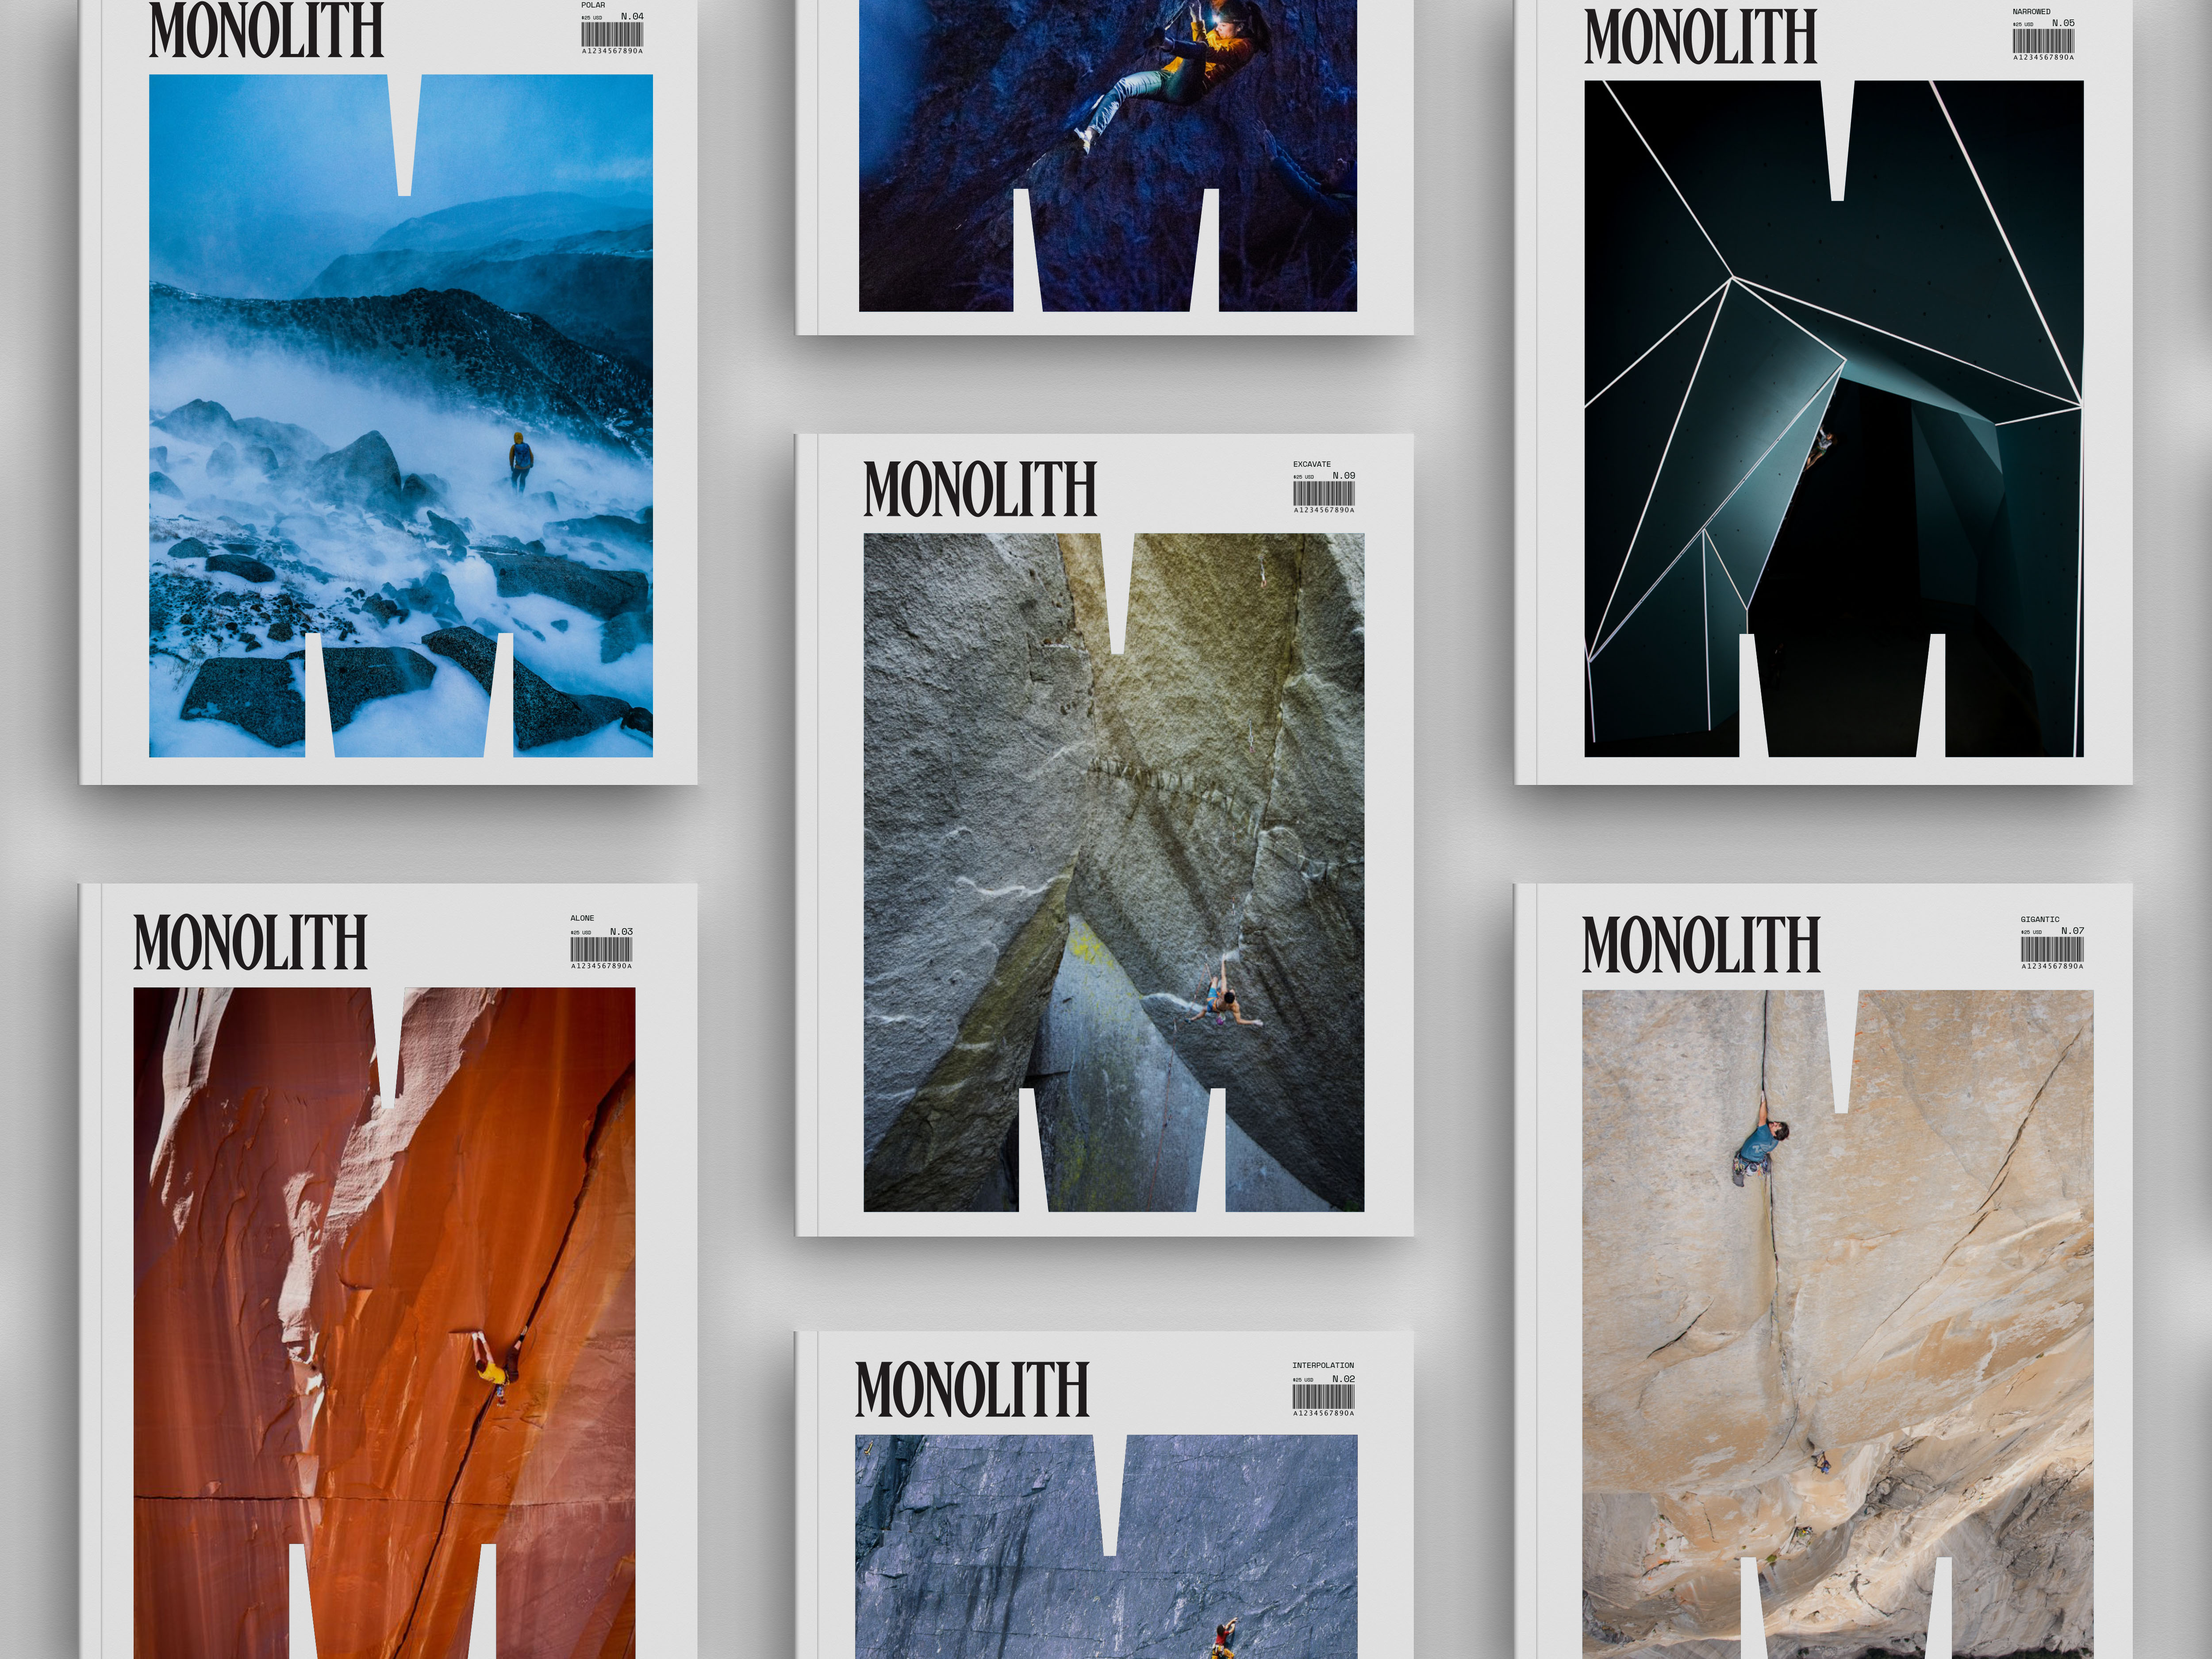 Monolith Graphic Design for Publication